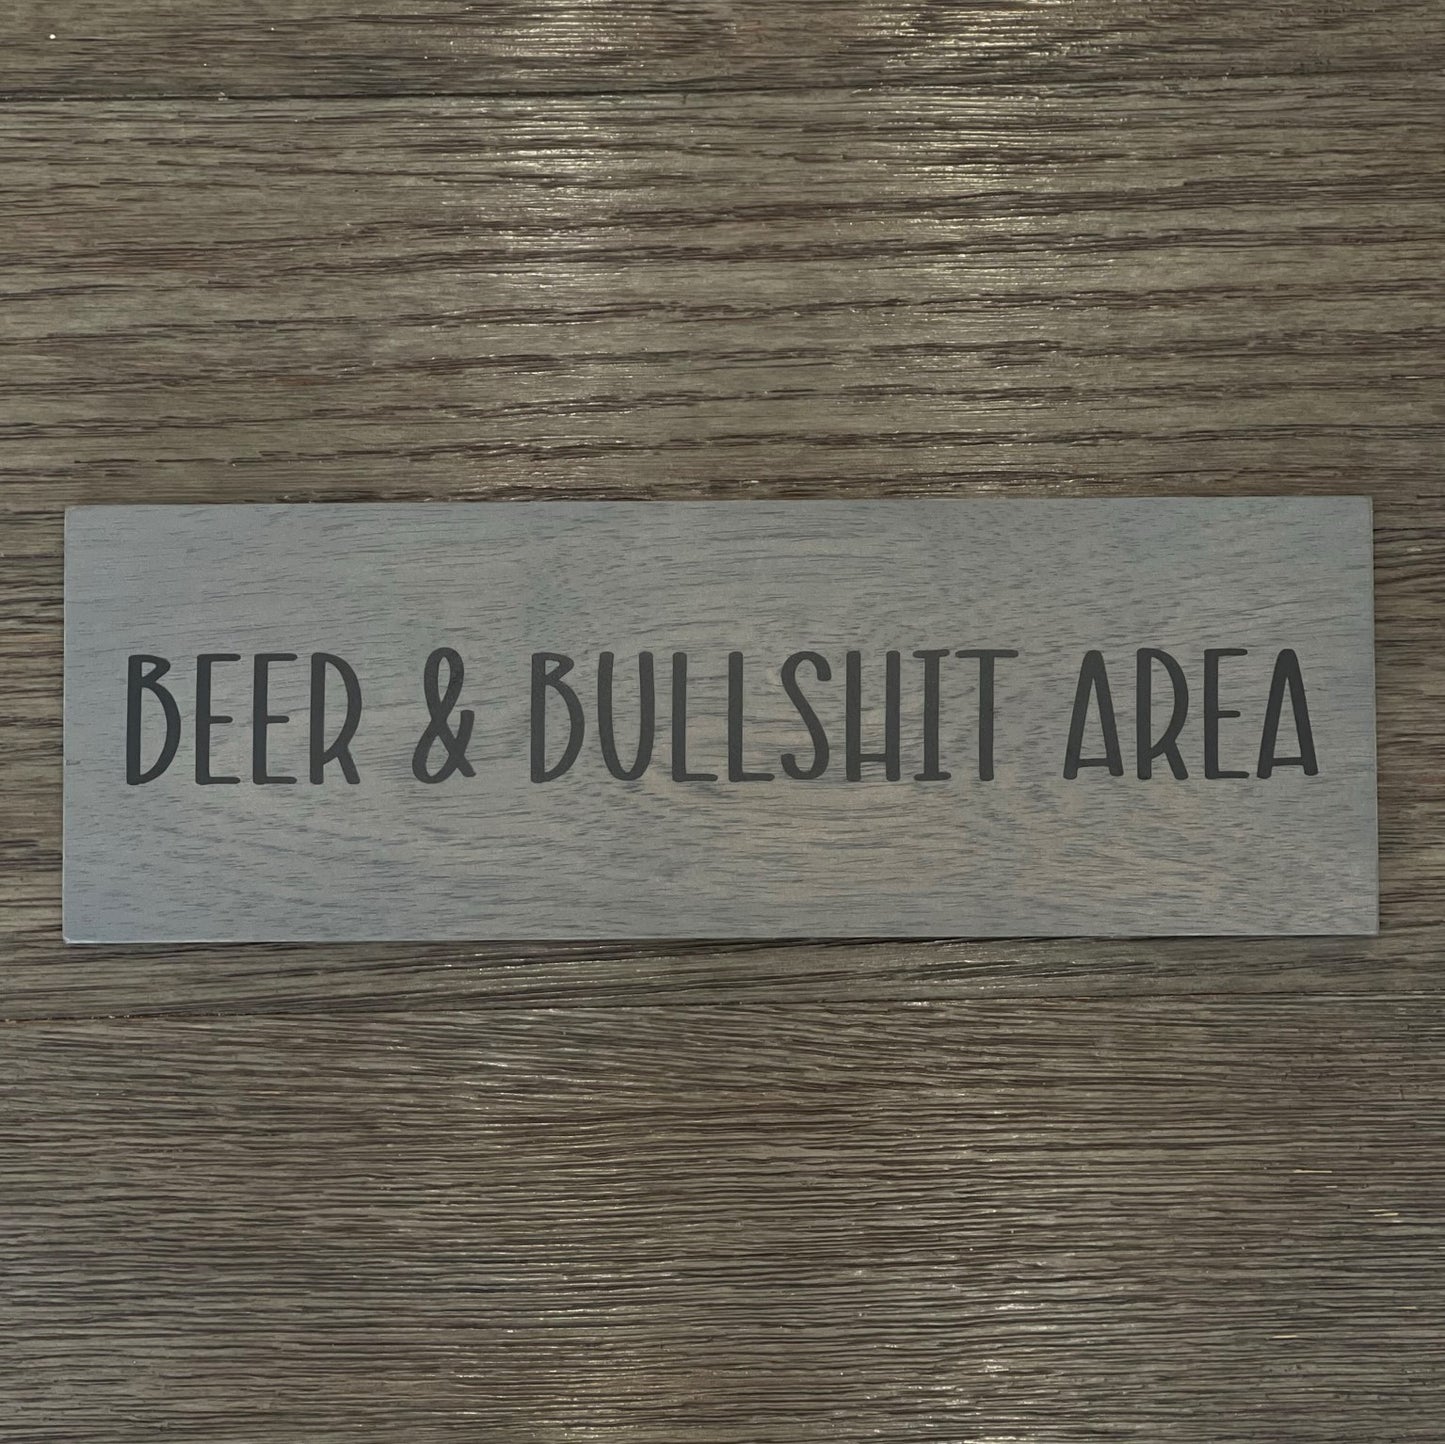 Beer & Bullshit Area - Funny Sign - Wall Decor - Bar Wall Art - Wooden Sign